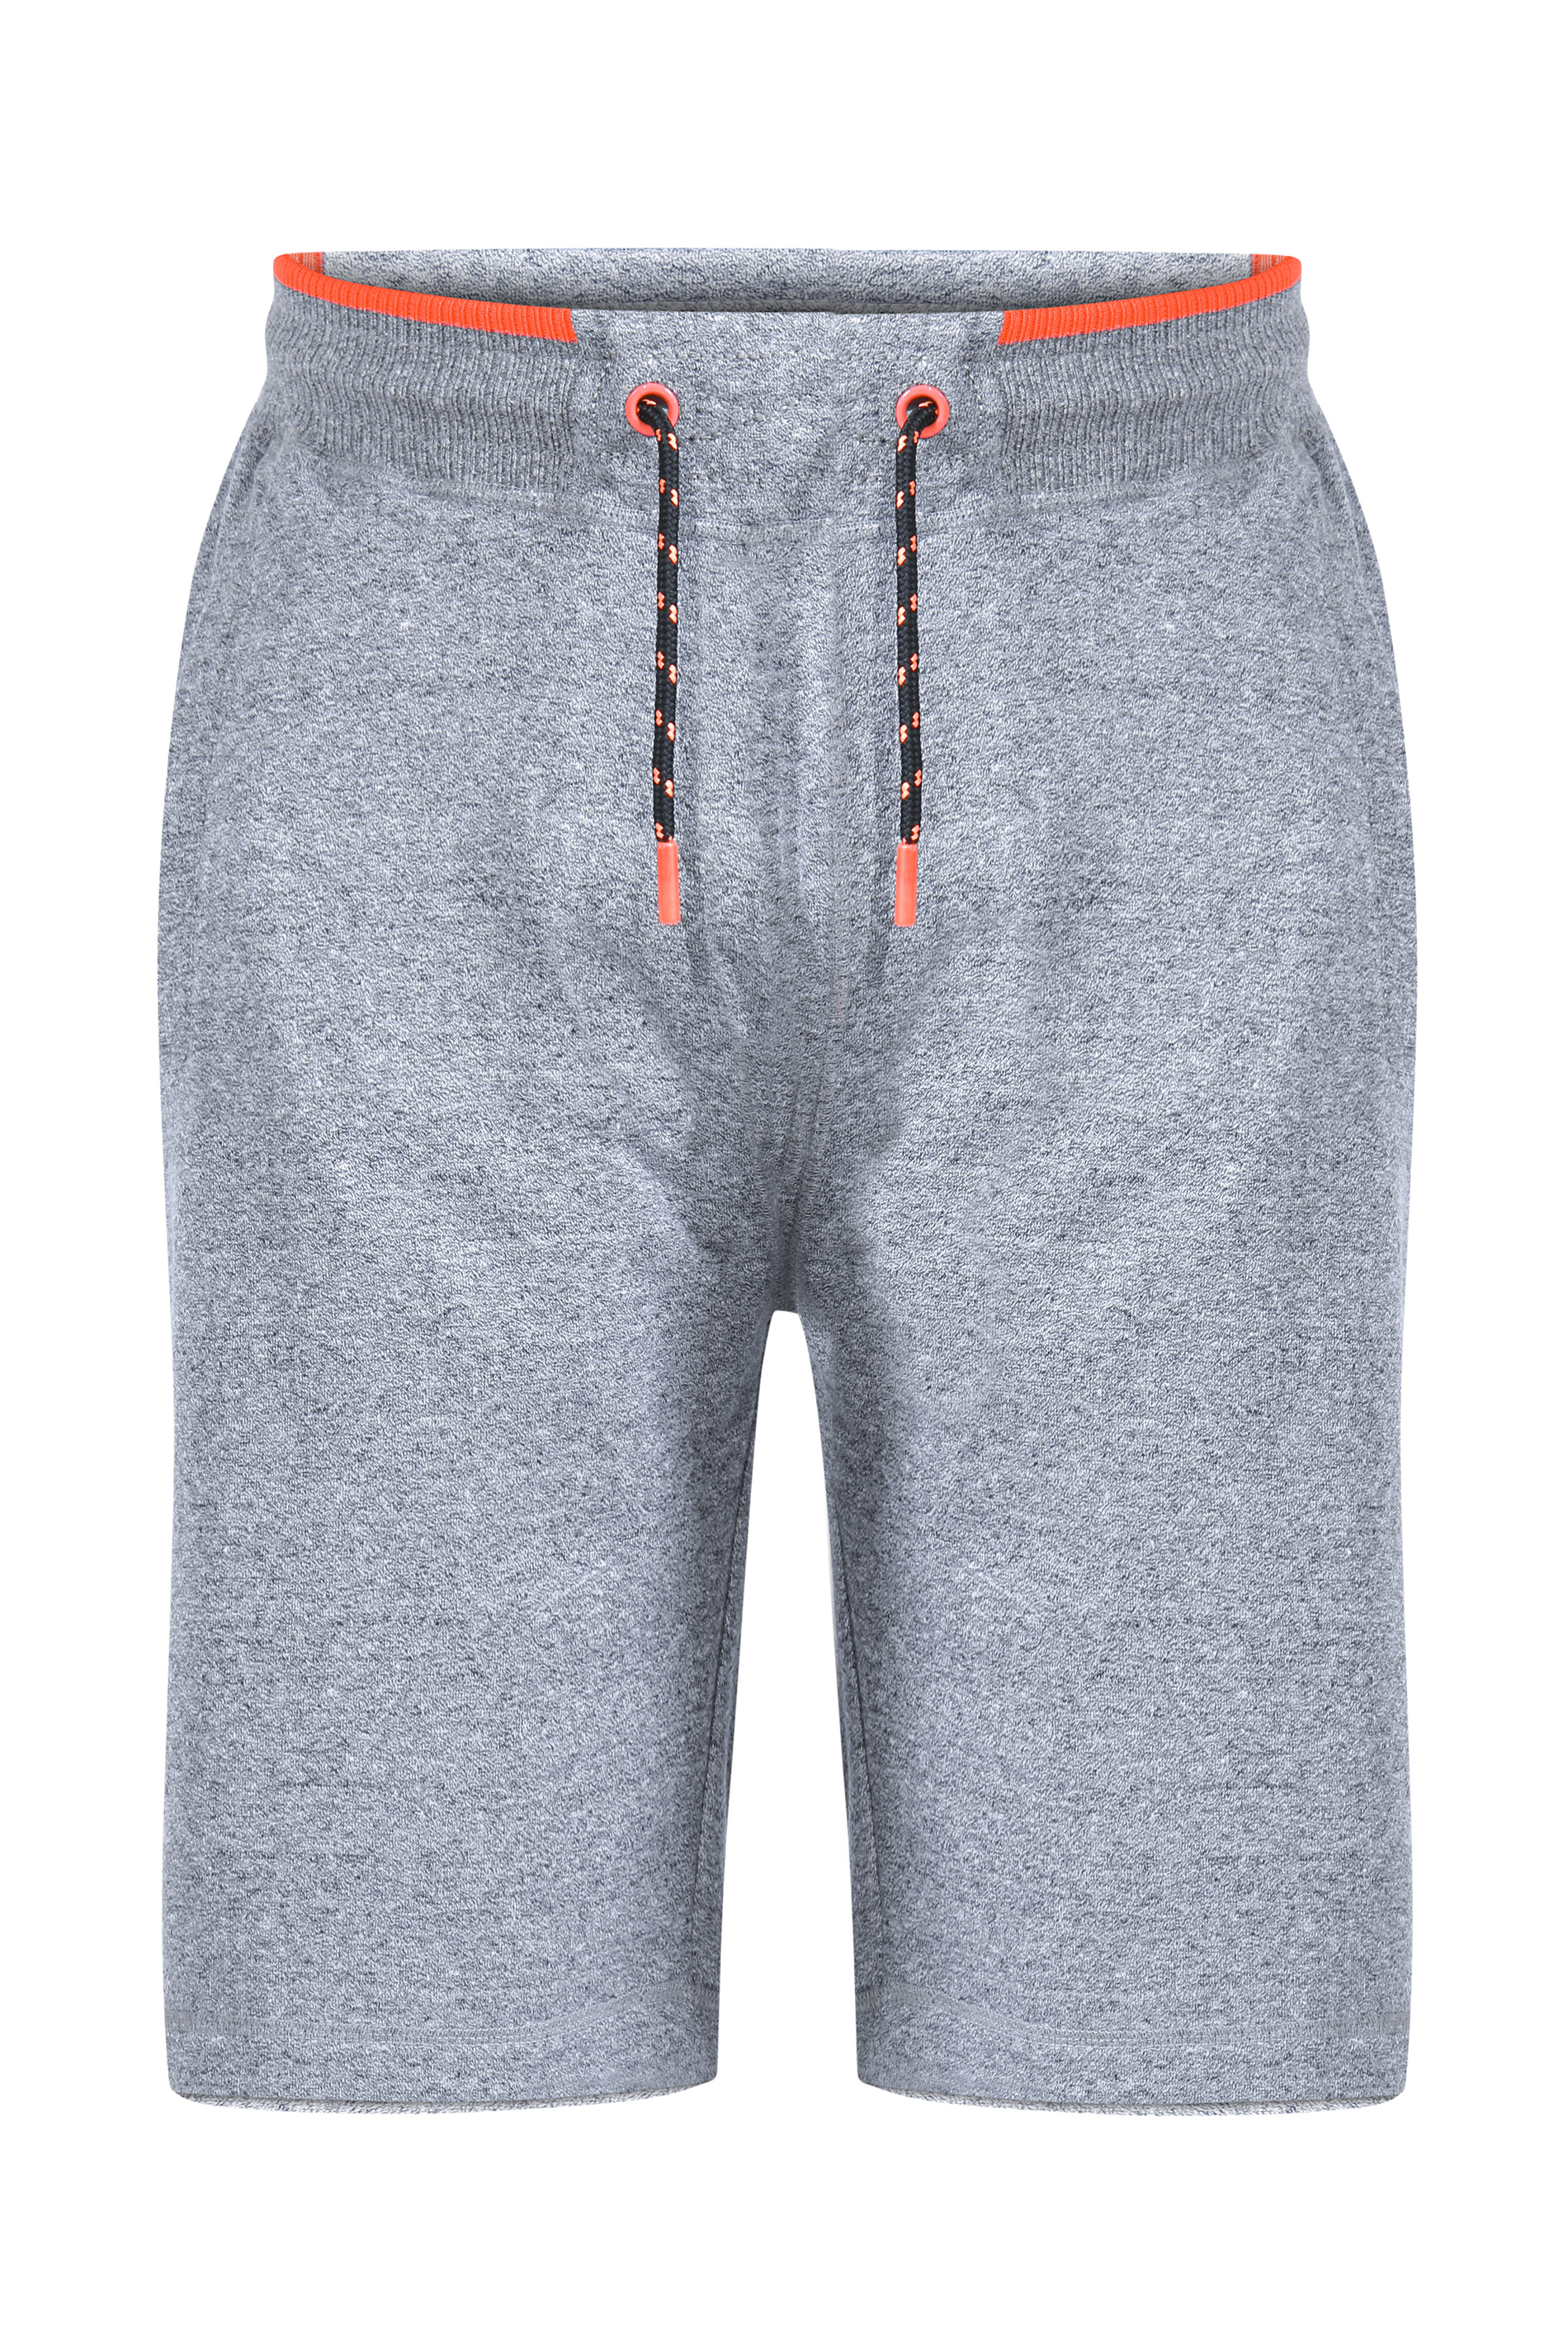 D555 Grey Ribbed Waist Fleece Shorts_f.jpg